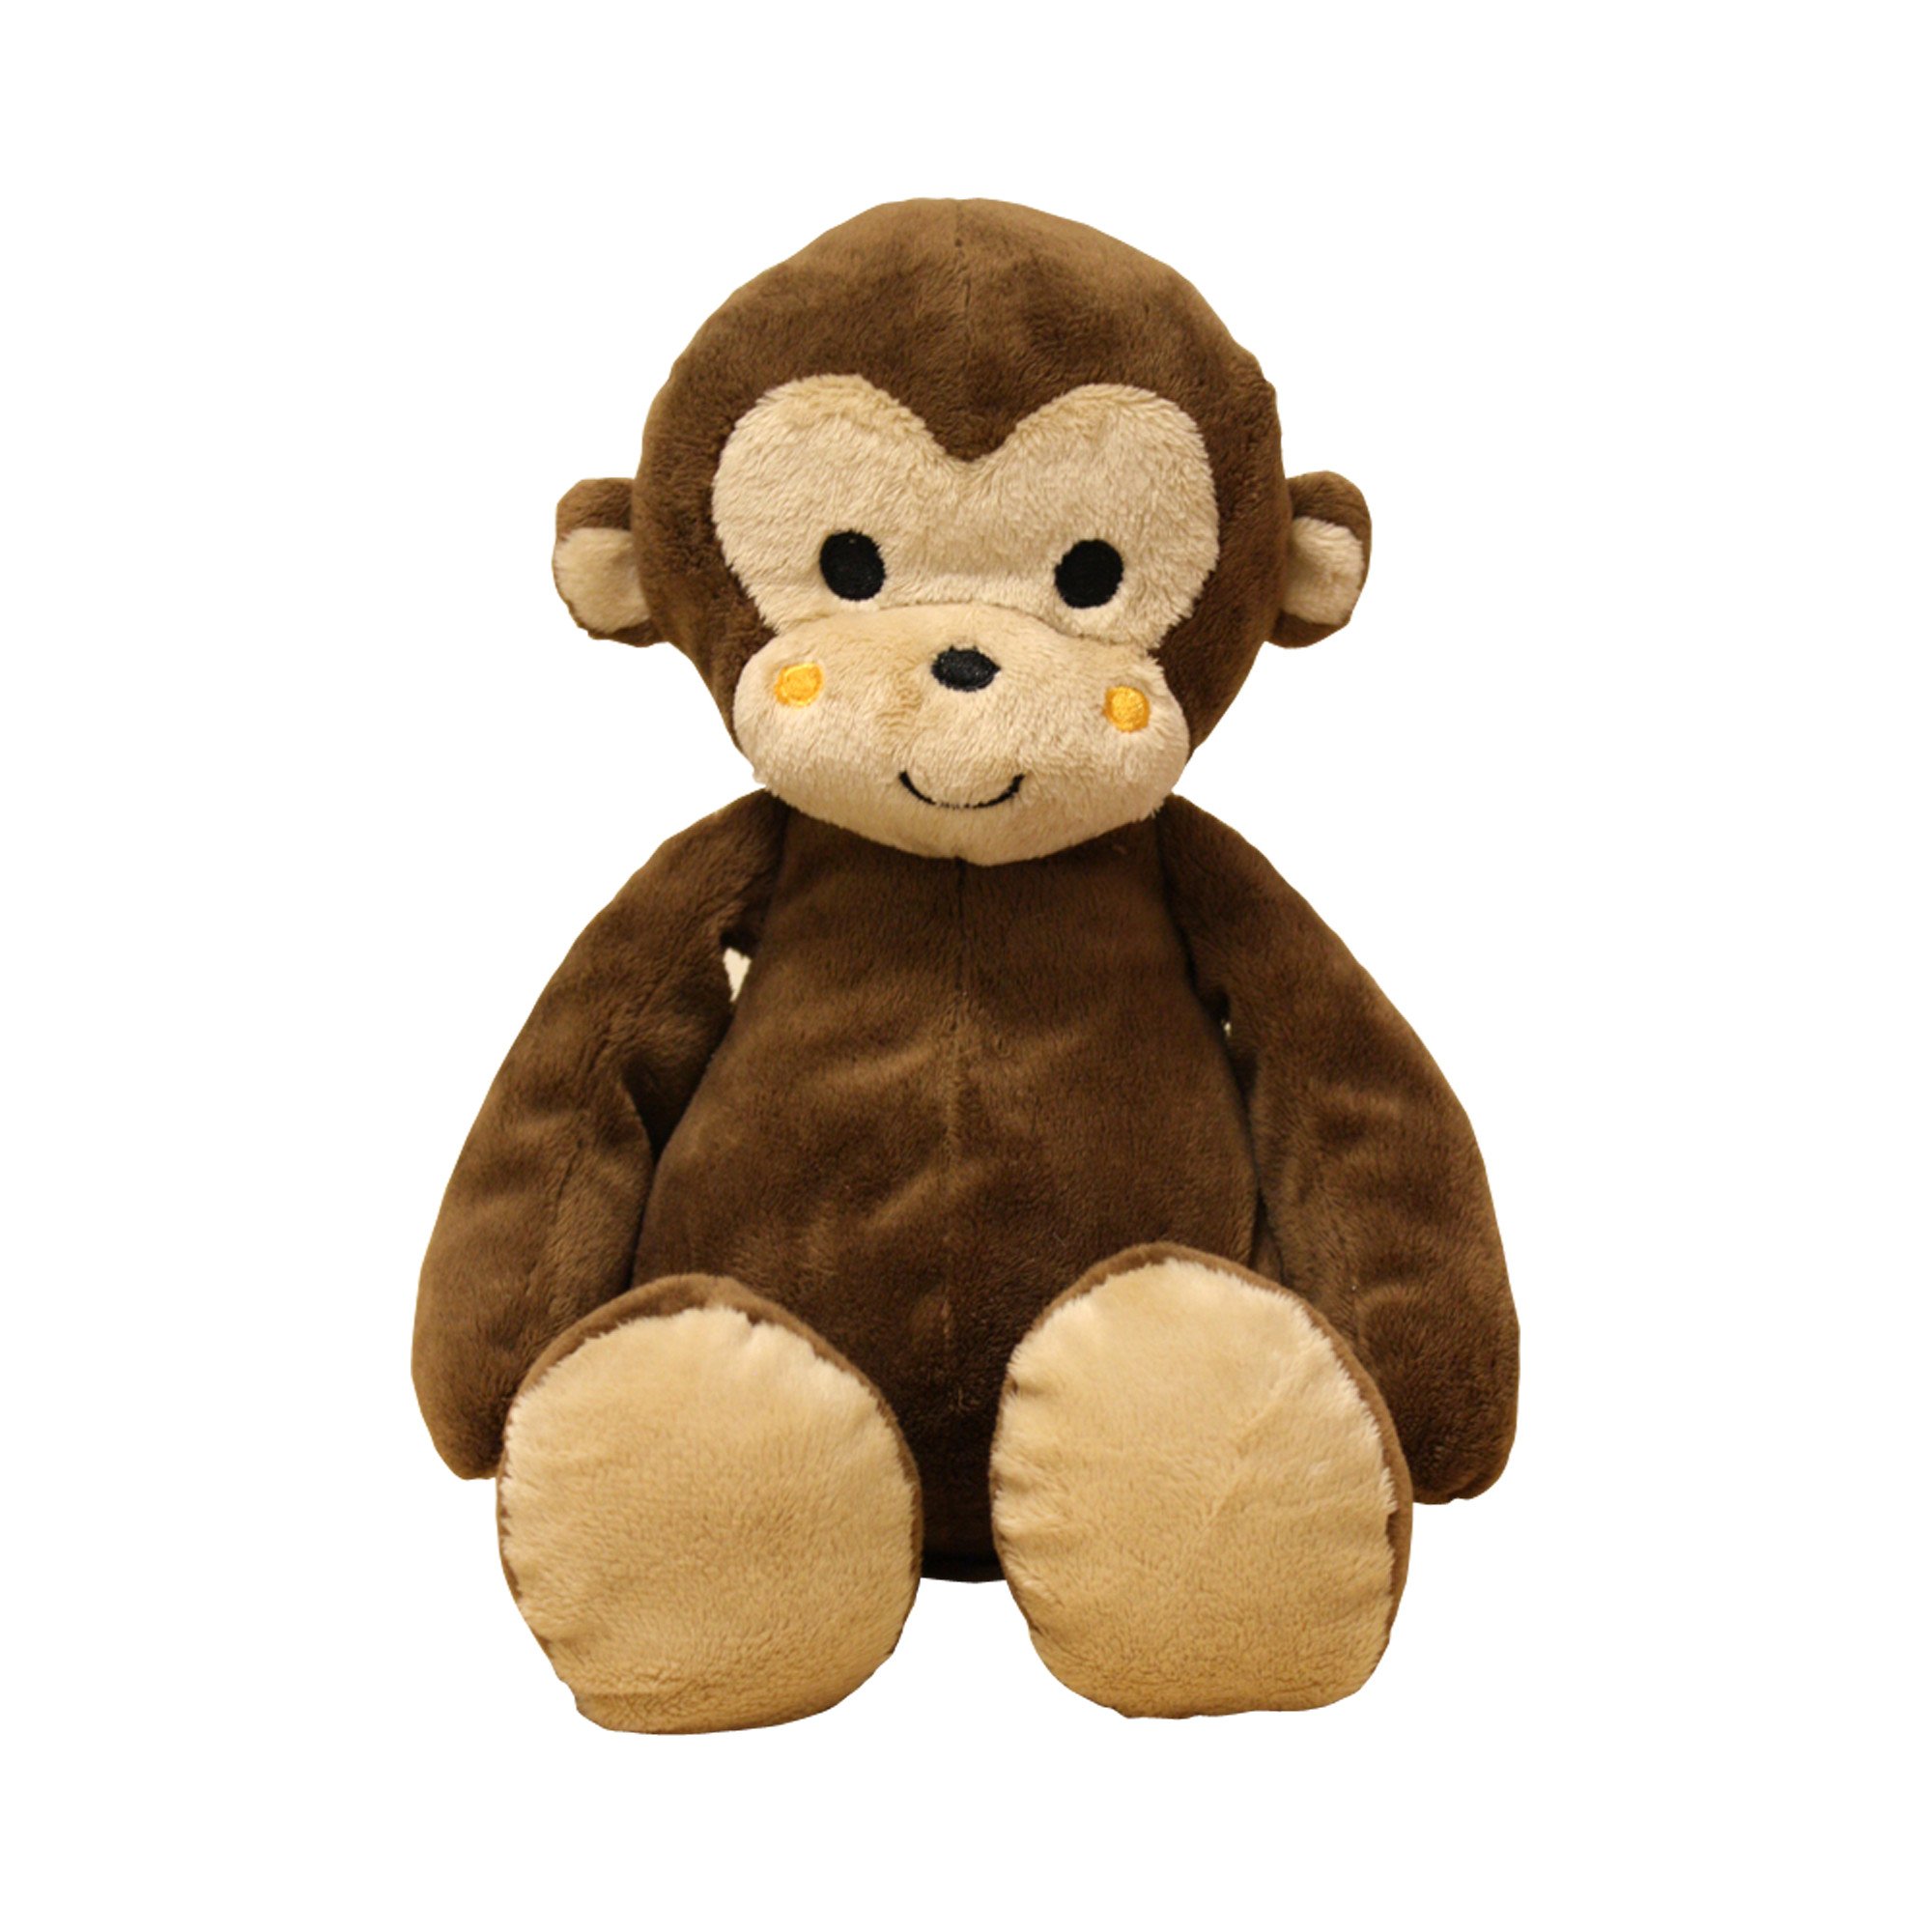 Bedtime Originals Brown Plush Monkey Stuffed Animal - Ollie - image 1 of 6